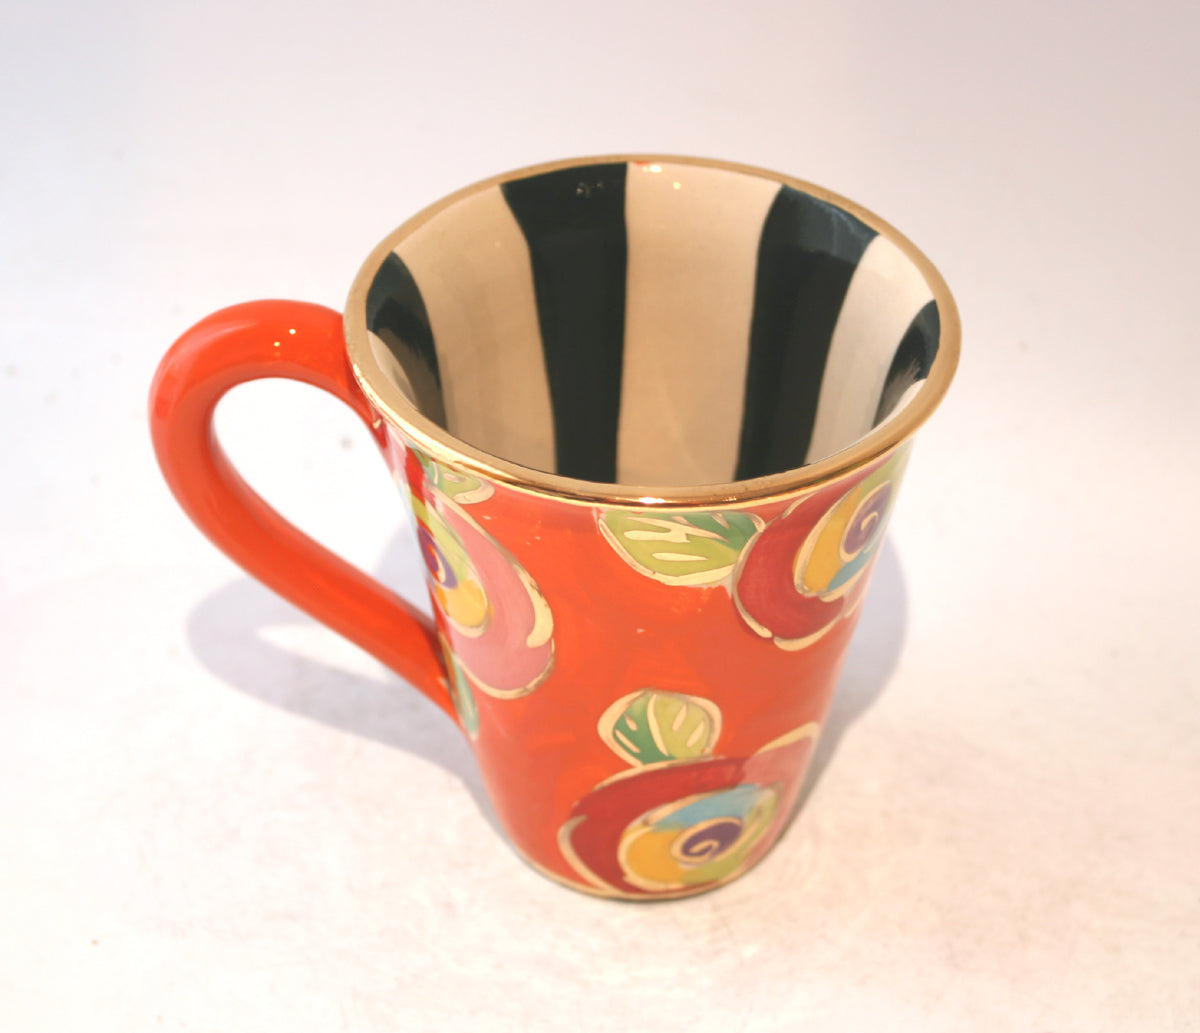 New Shape Large Mug in New Rose Orange with Black and White Stripes